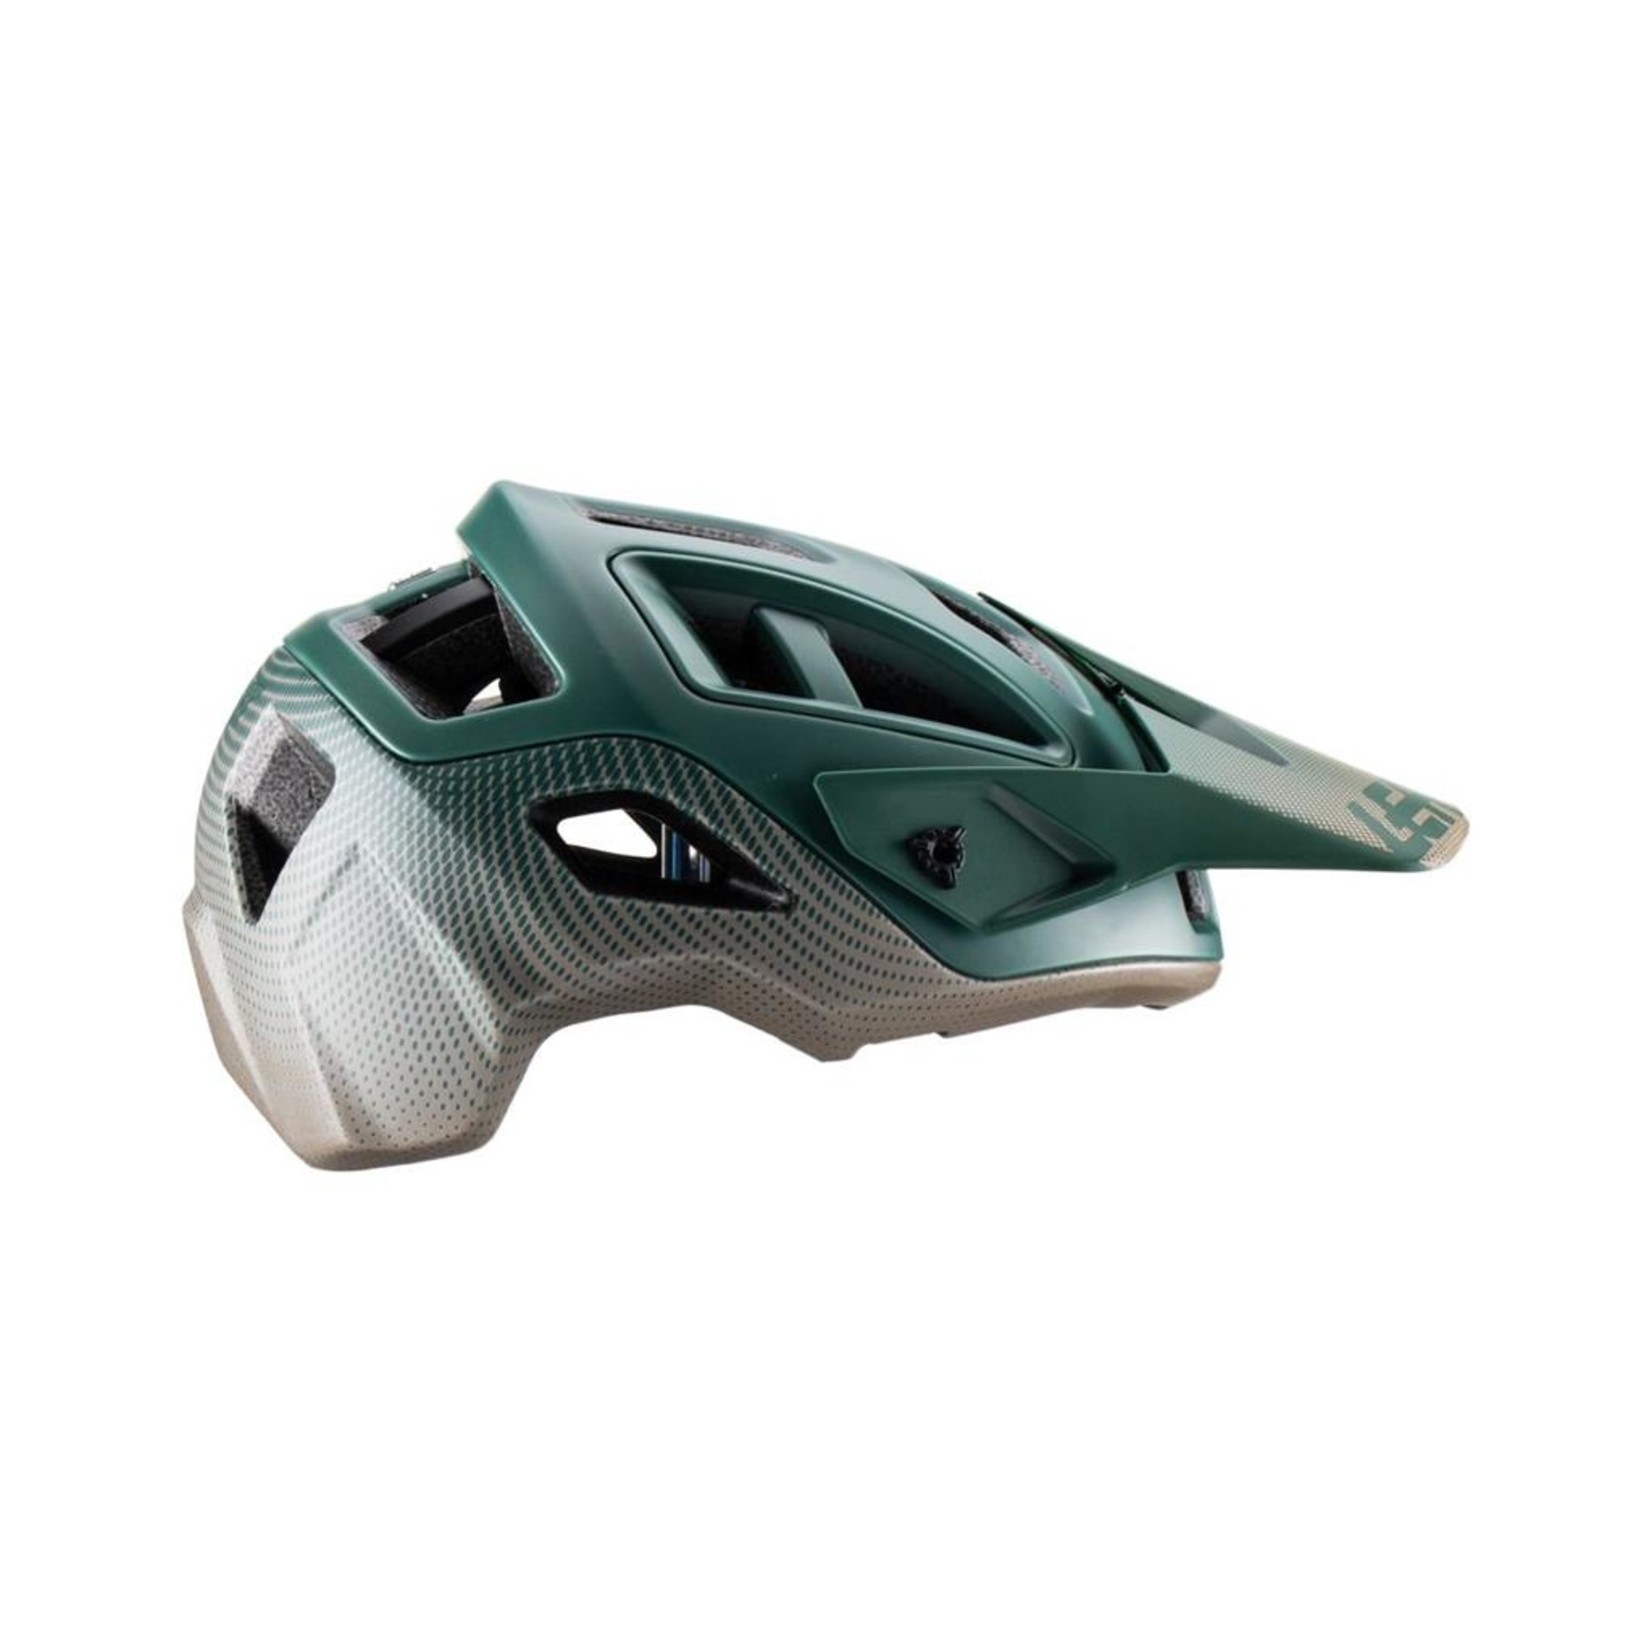 Leatt Leatt MTB 3.0 All Mountain Helmet